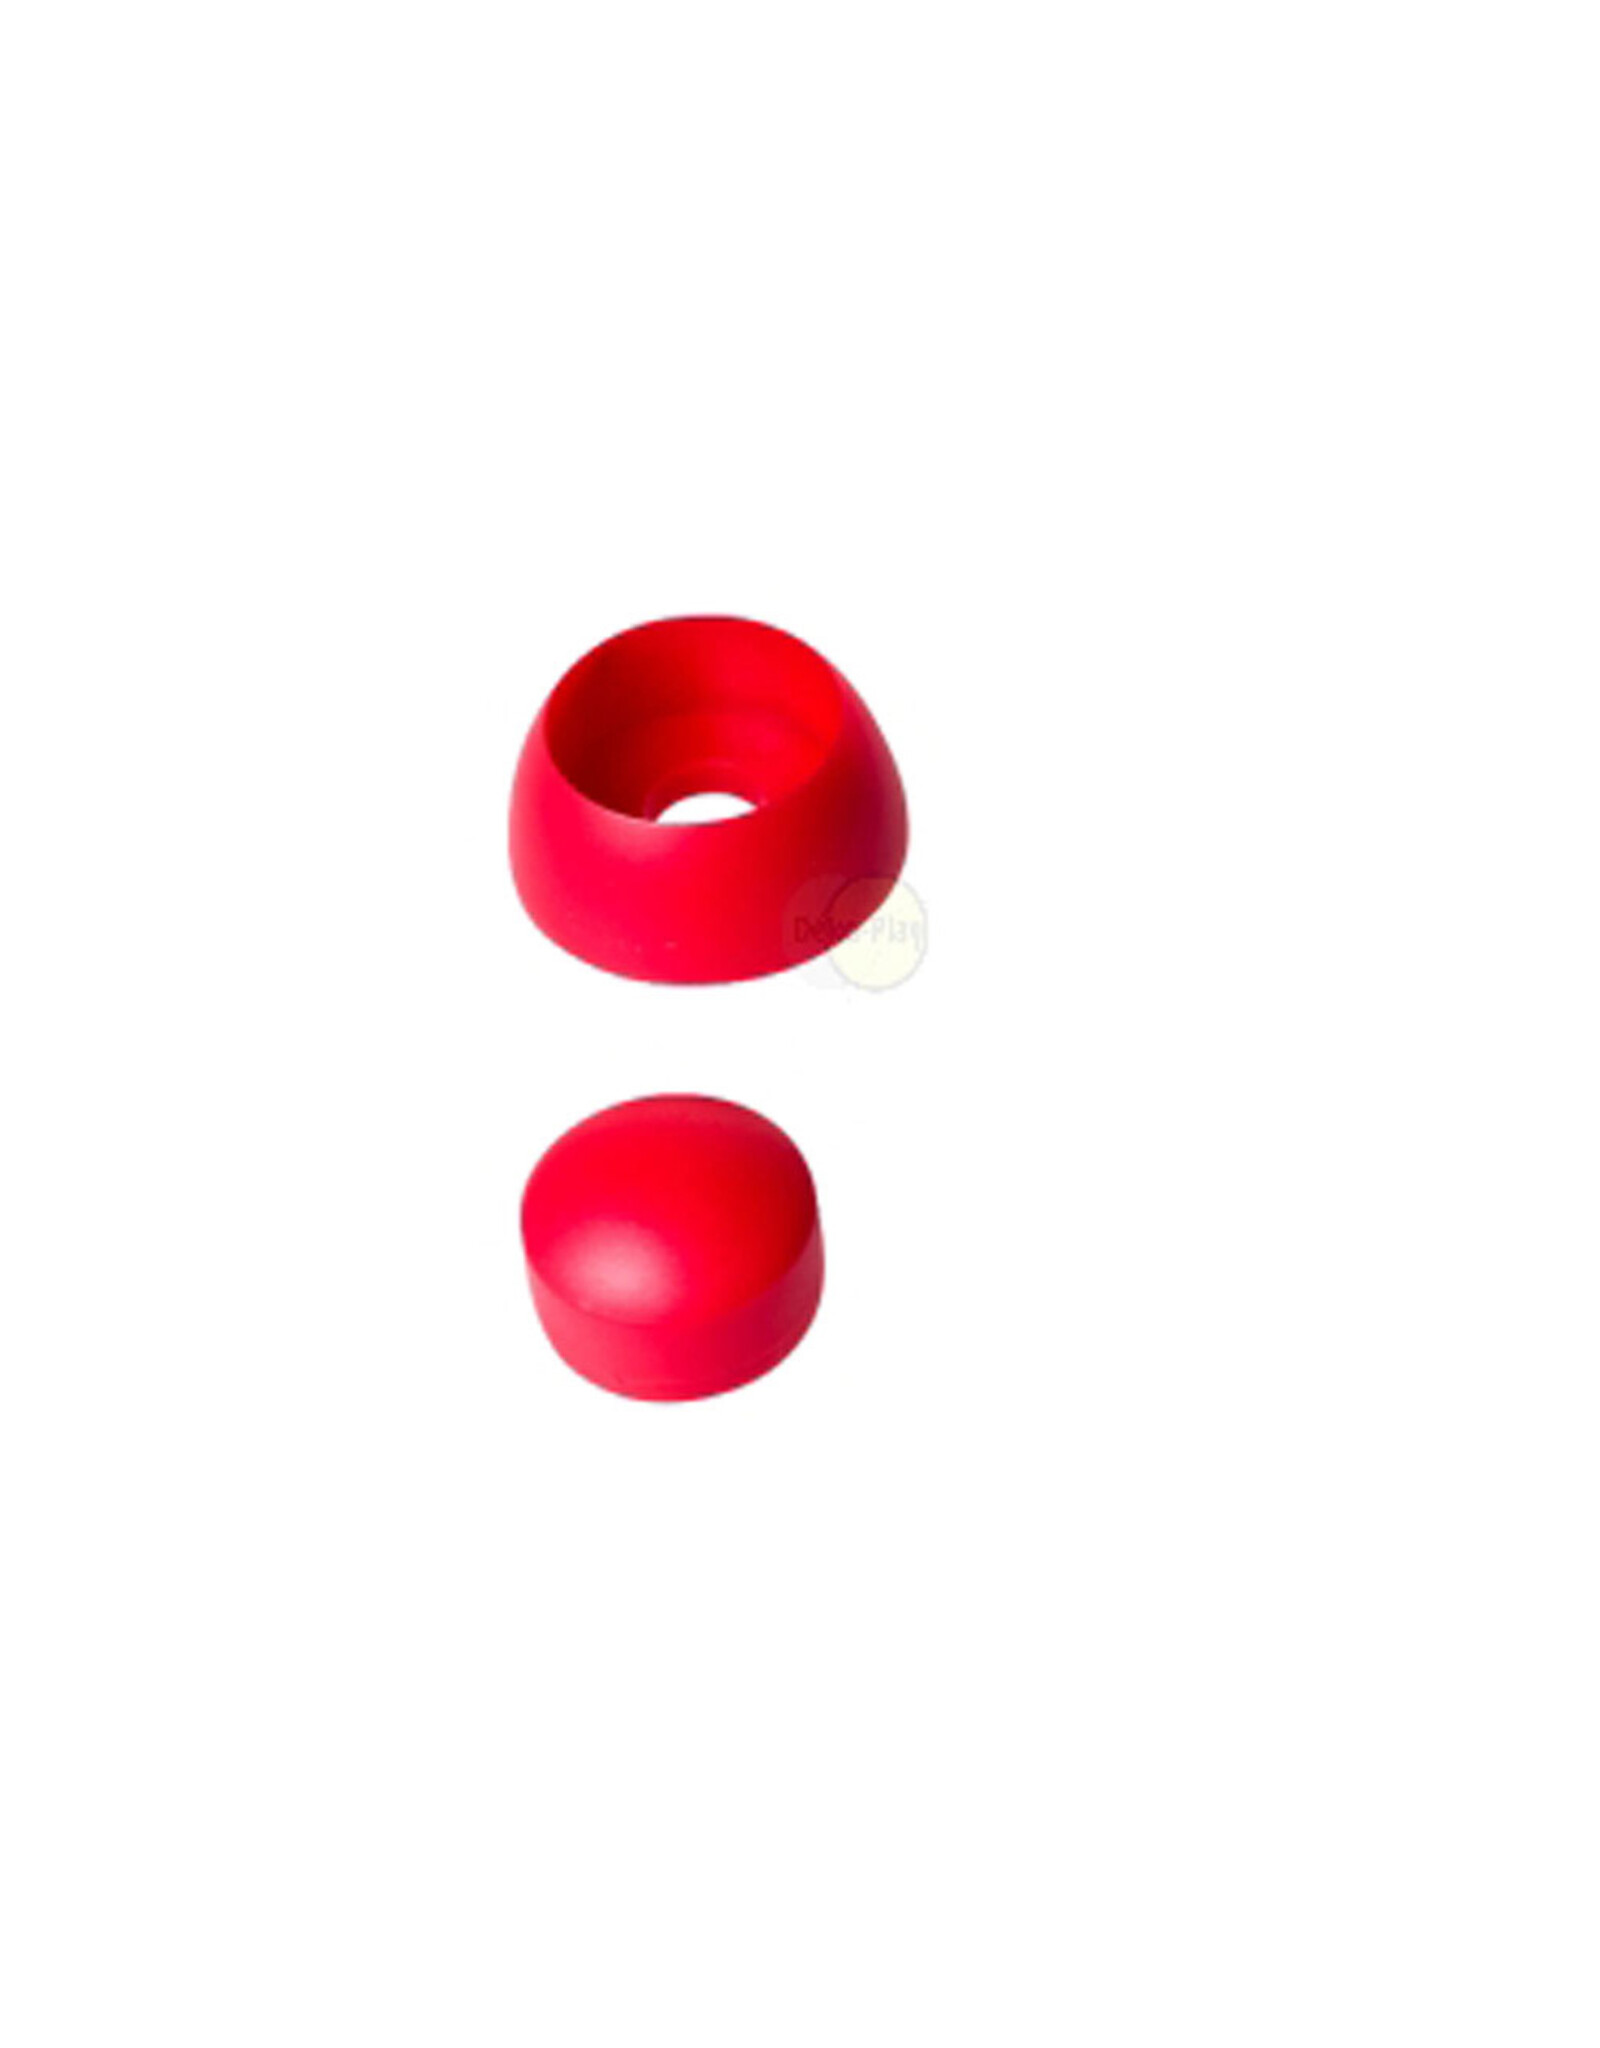 Déko-Play Déko-Play - cover cap M10 two-piece - per set - red